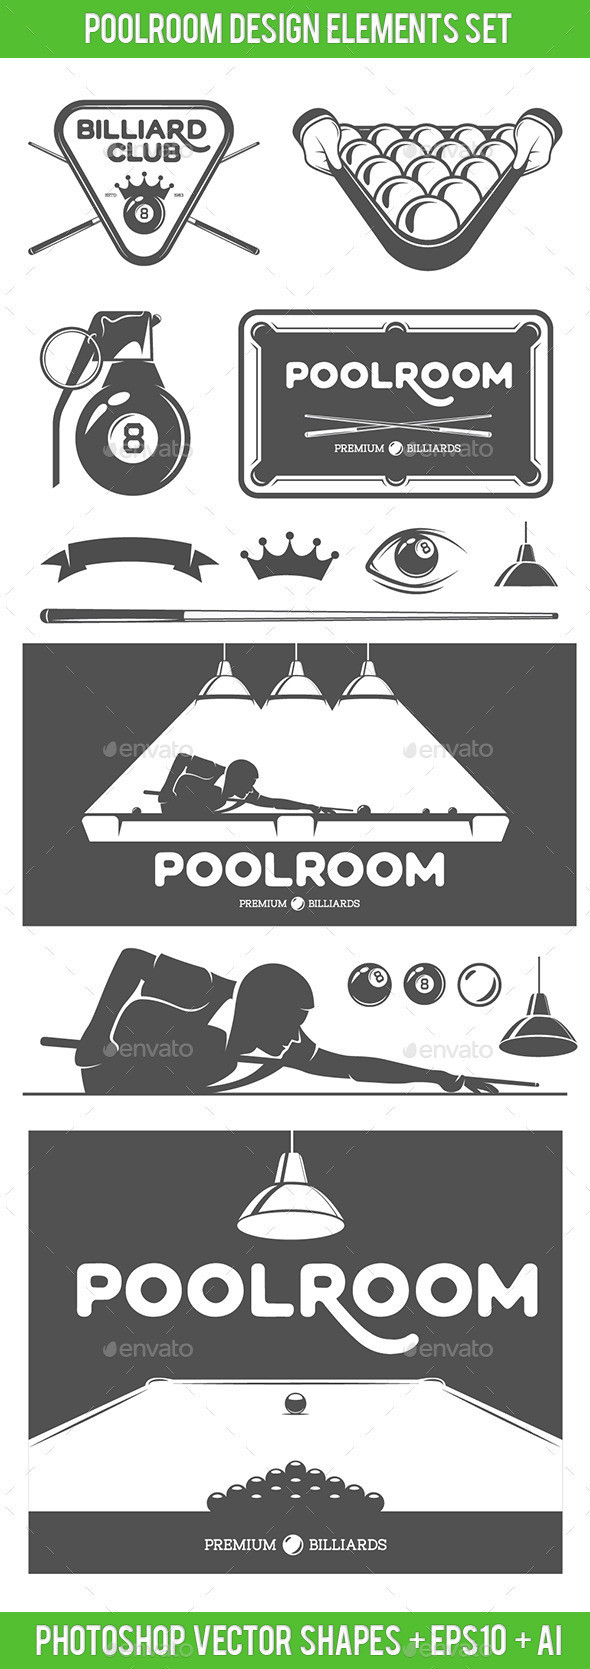 Poolroom set pr big